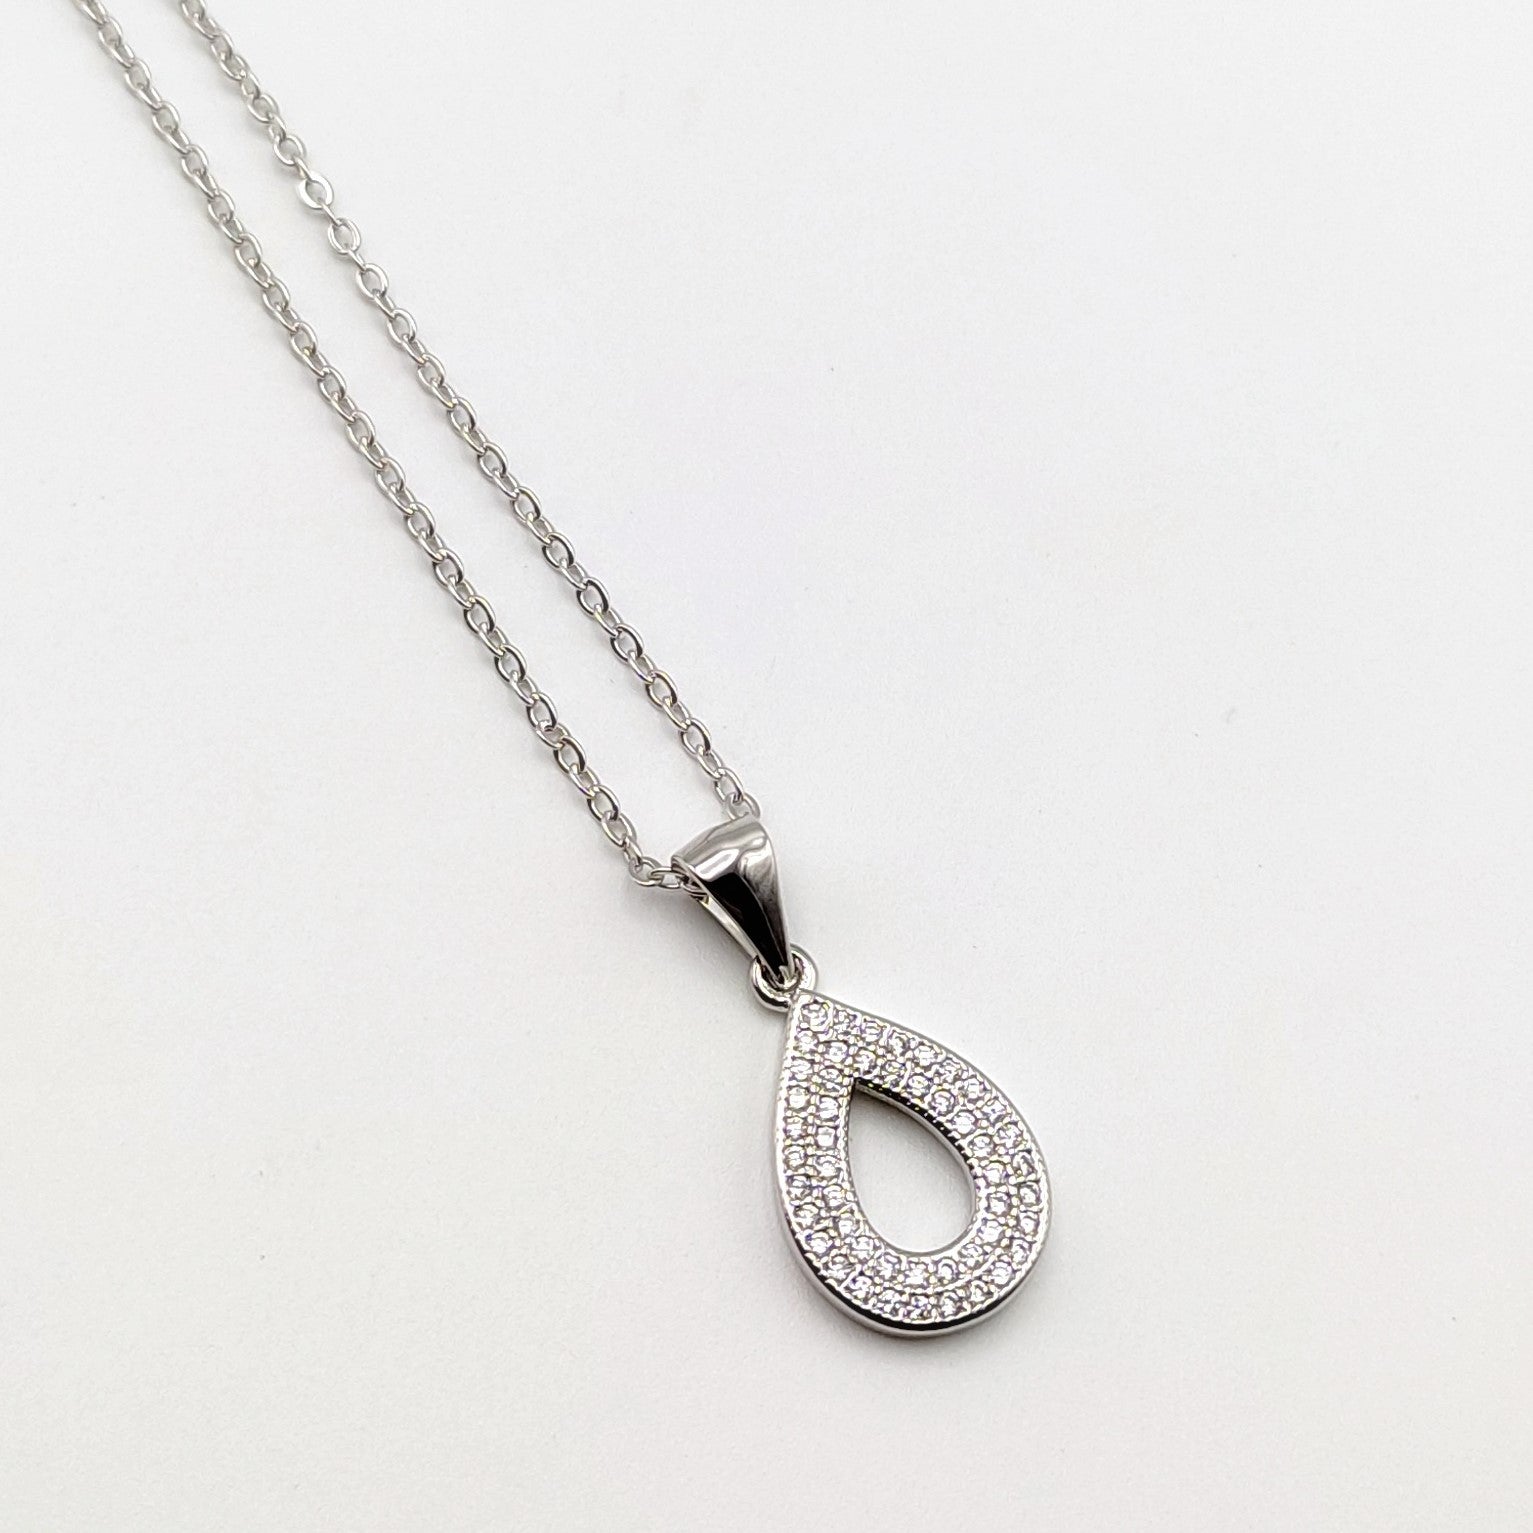 Pavé Diamond Pear Necklace